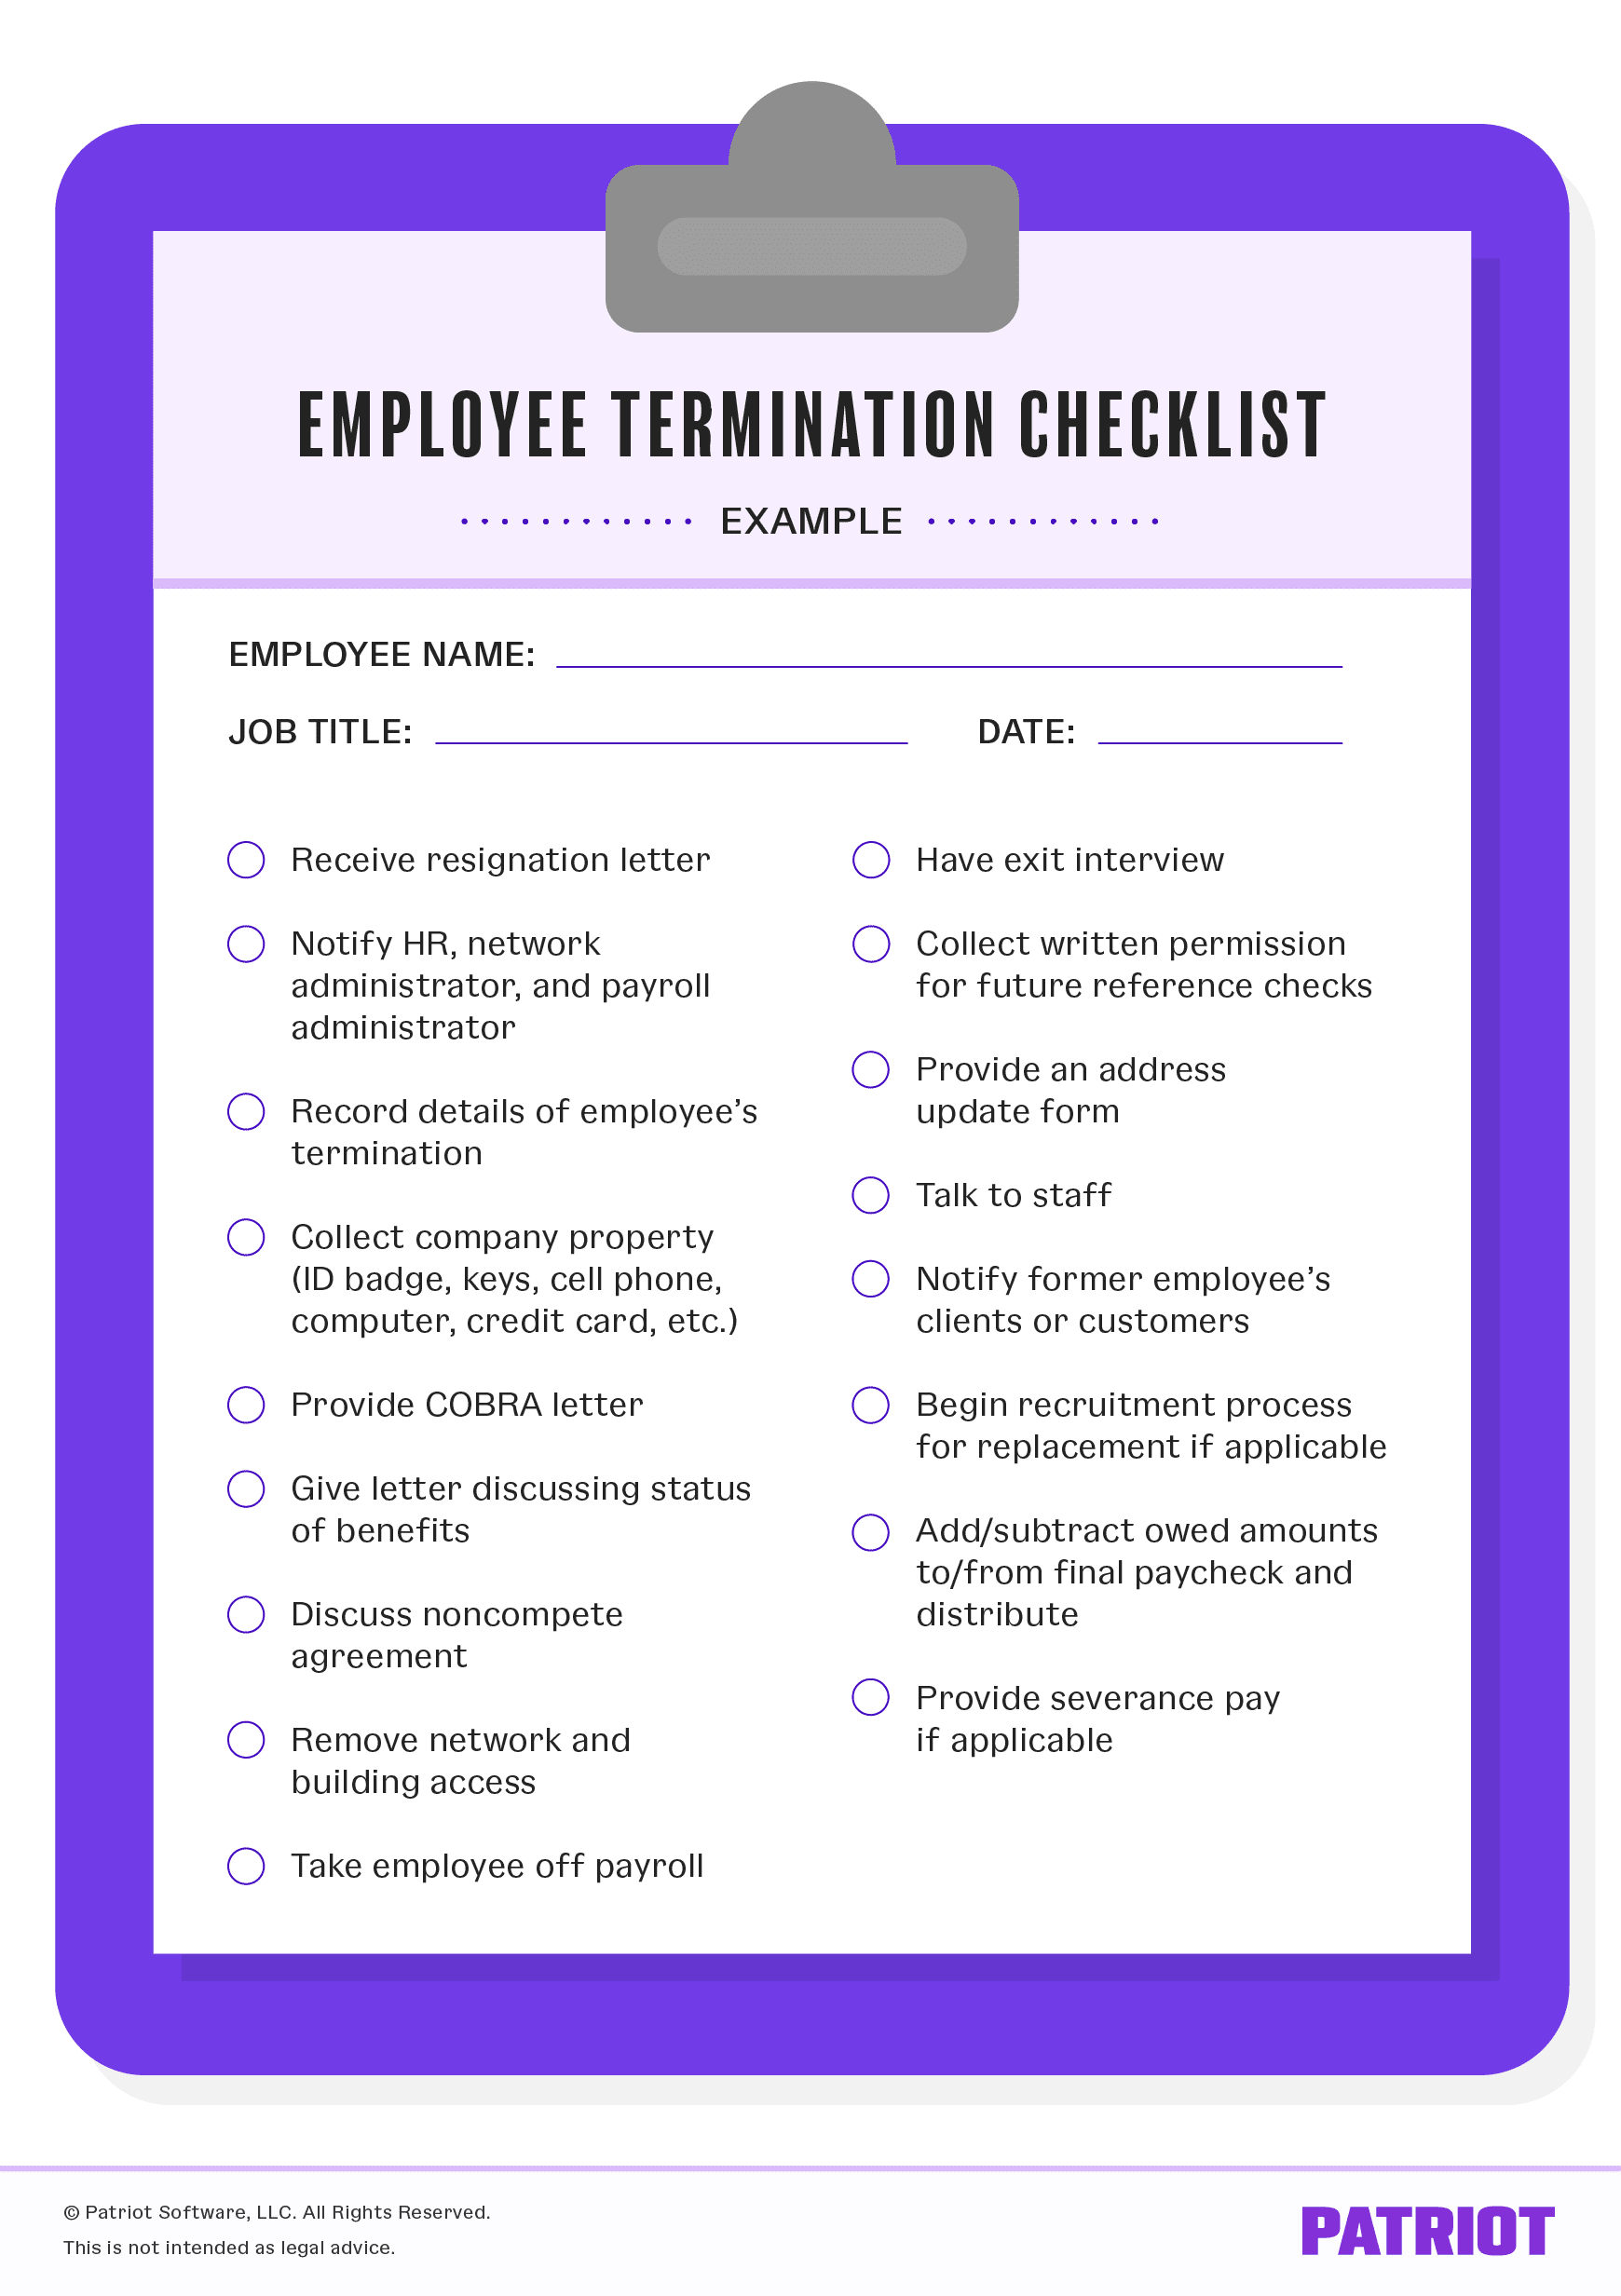 Sample employee termination checklist 